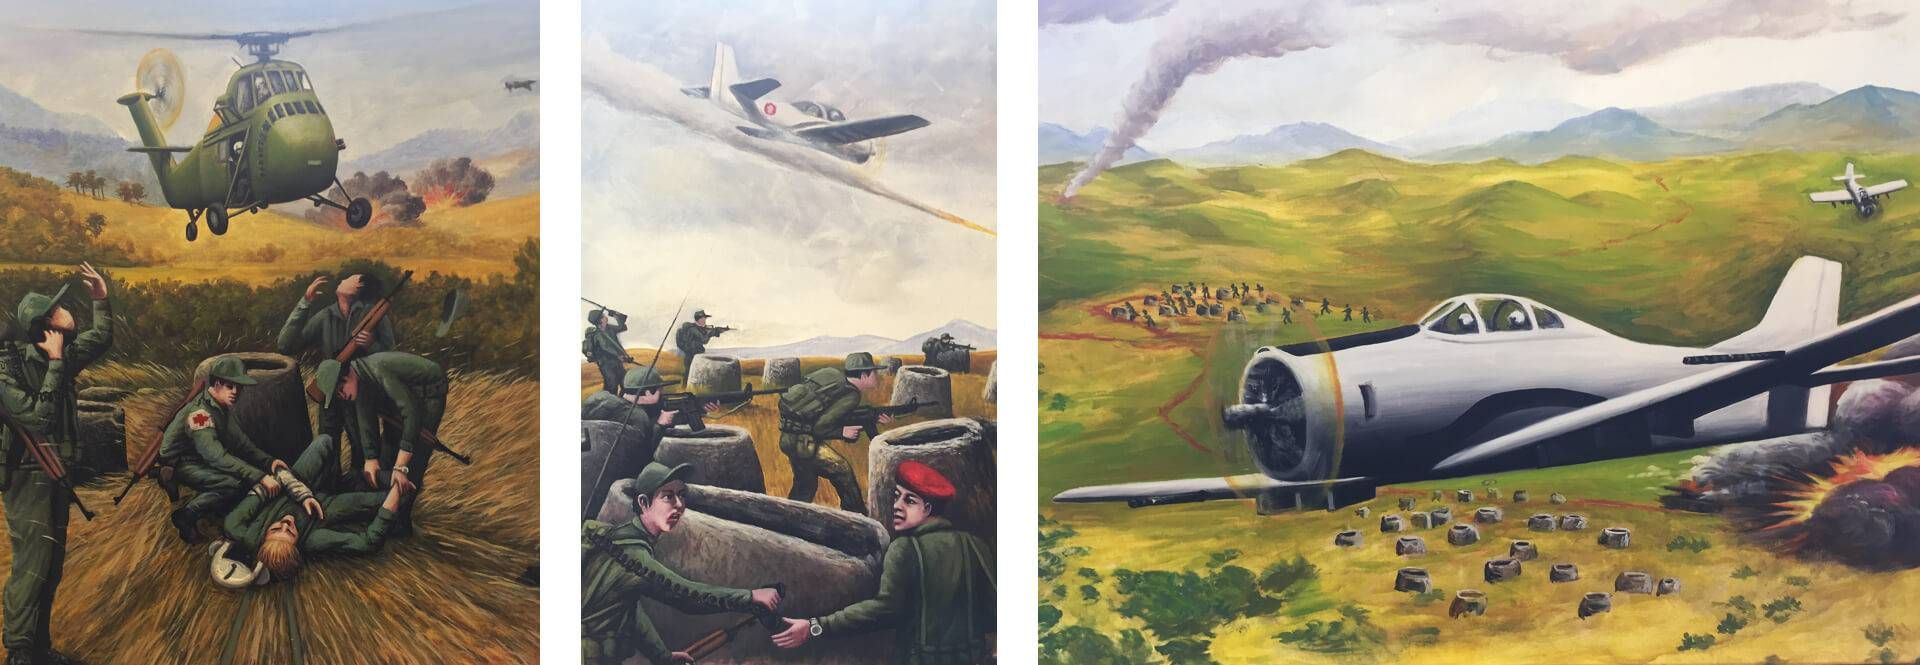 Paintings of war scenes from the Secret War in Laos